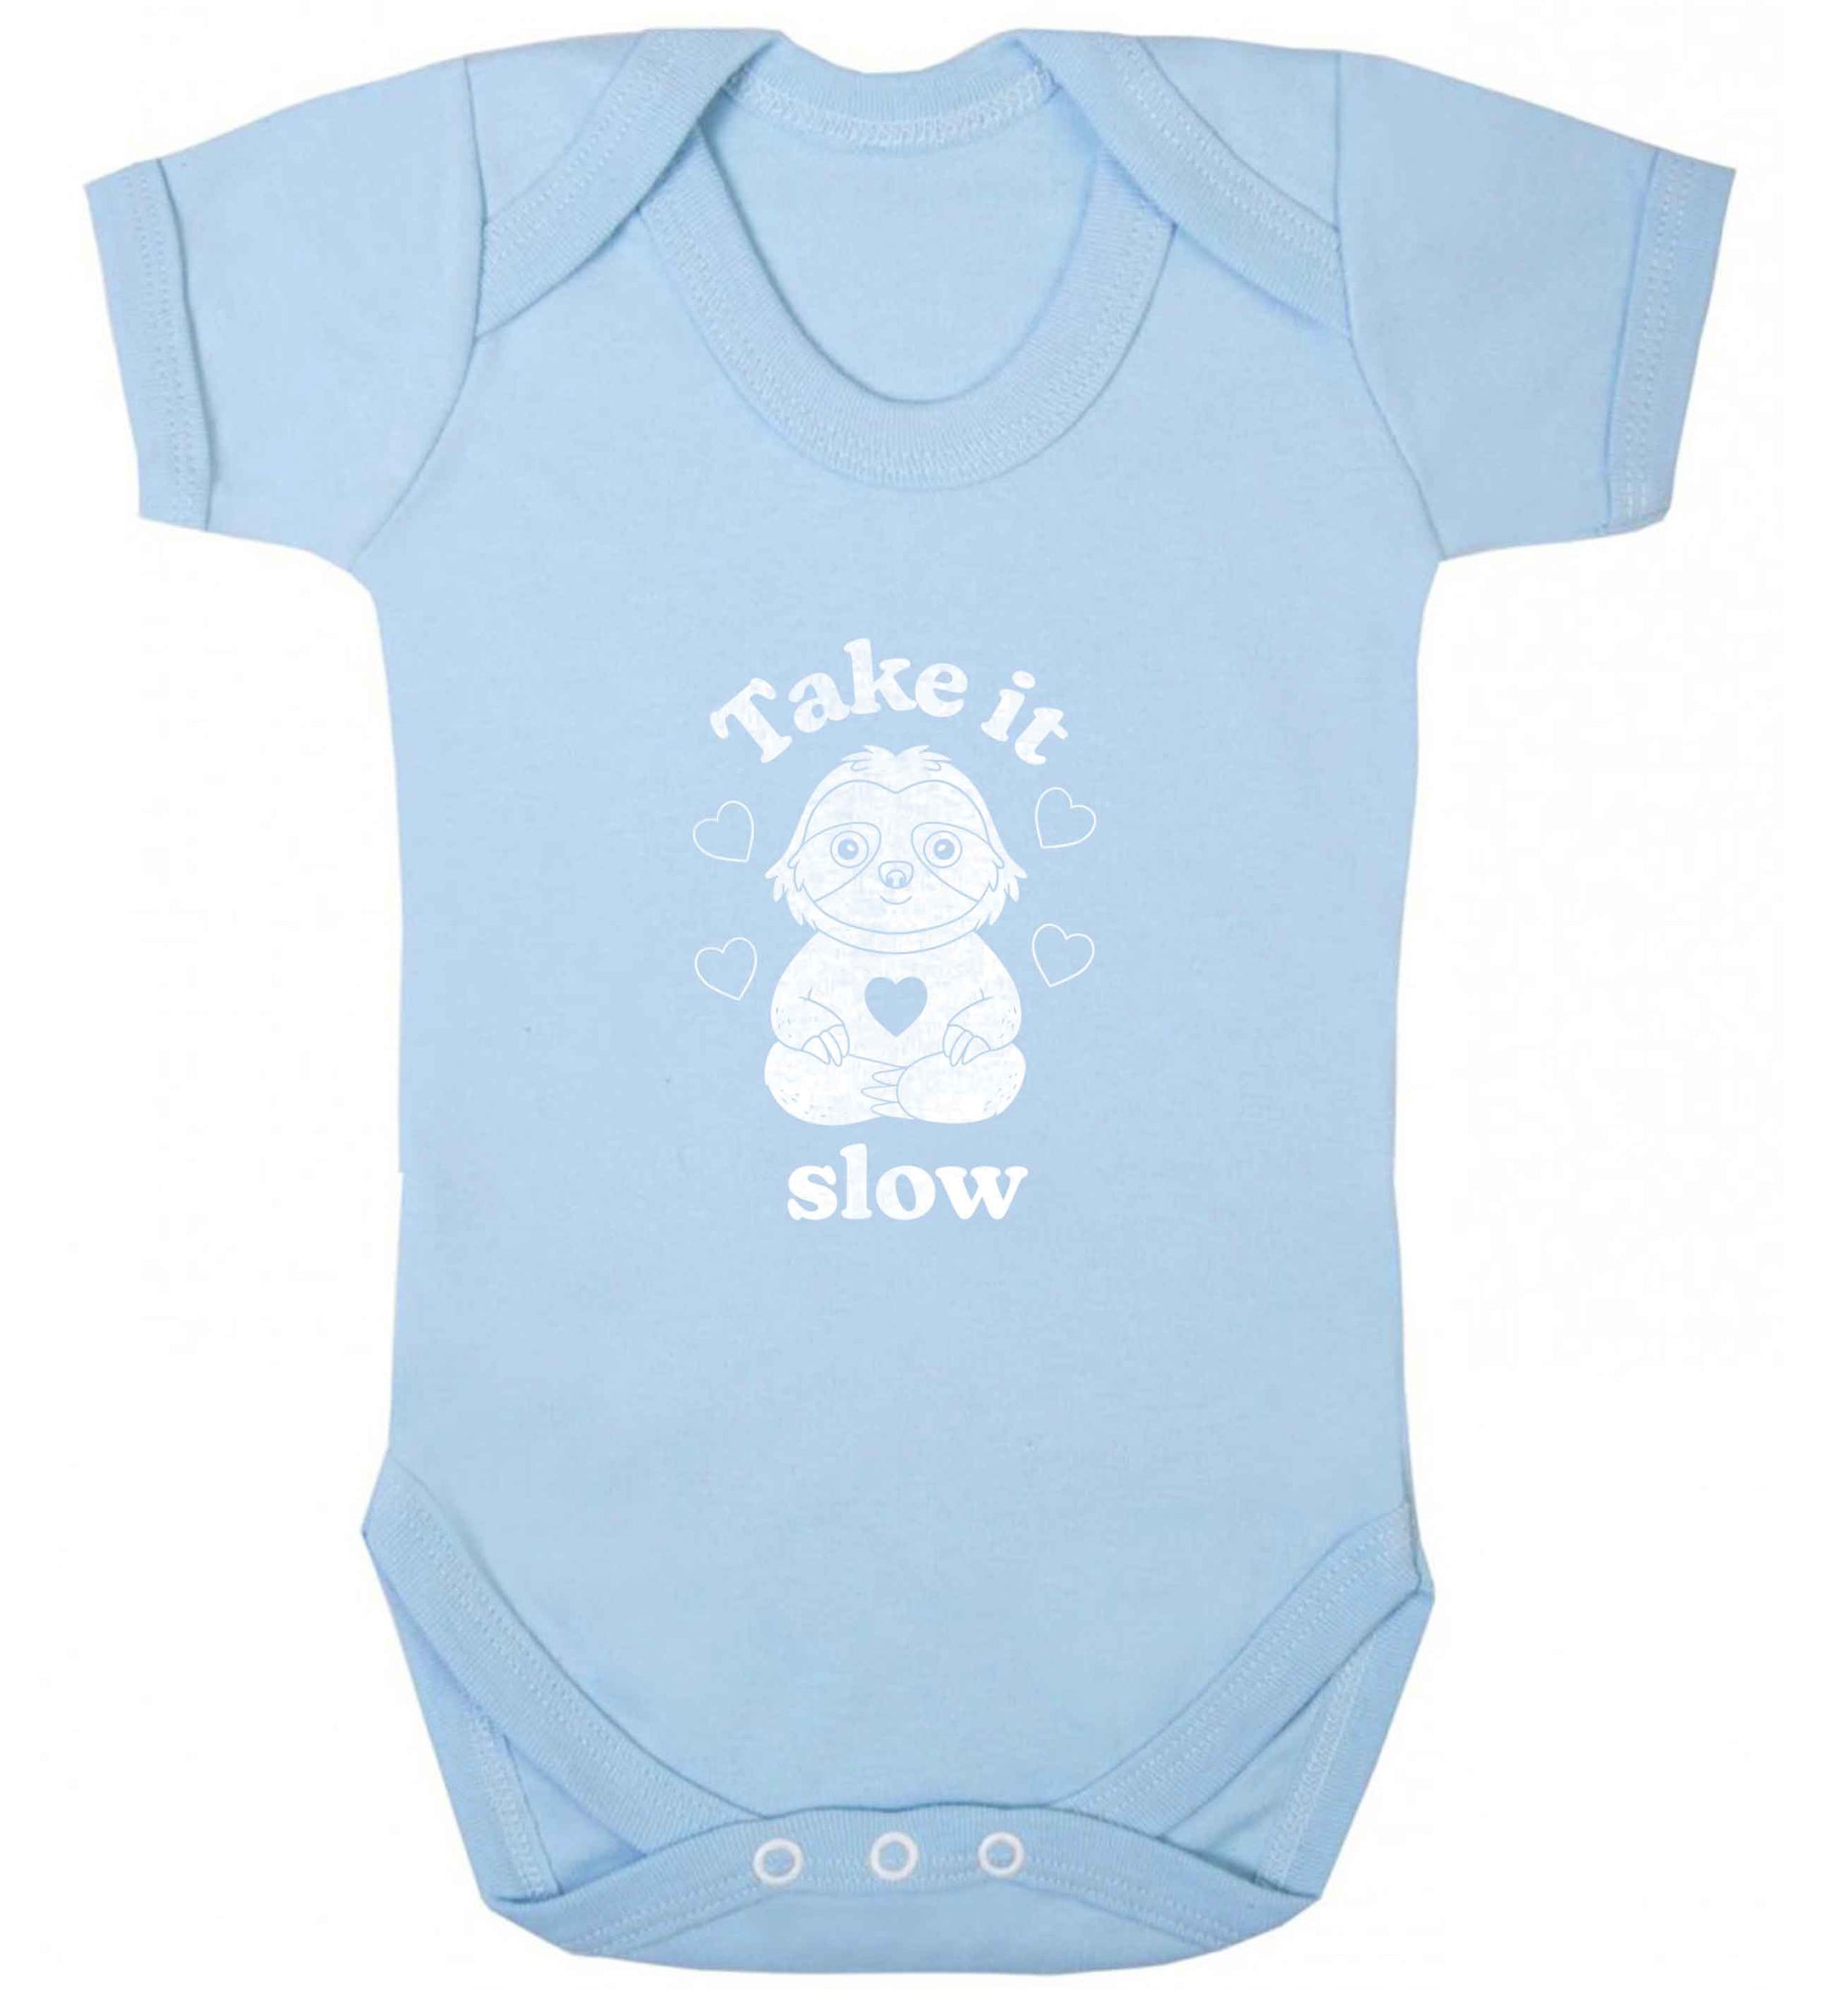 Take it slow baby vest pale blue 18-24 months